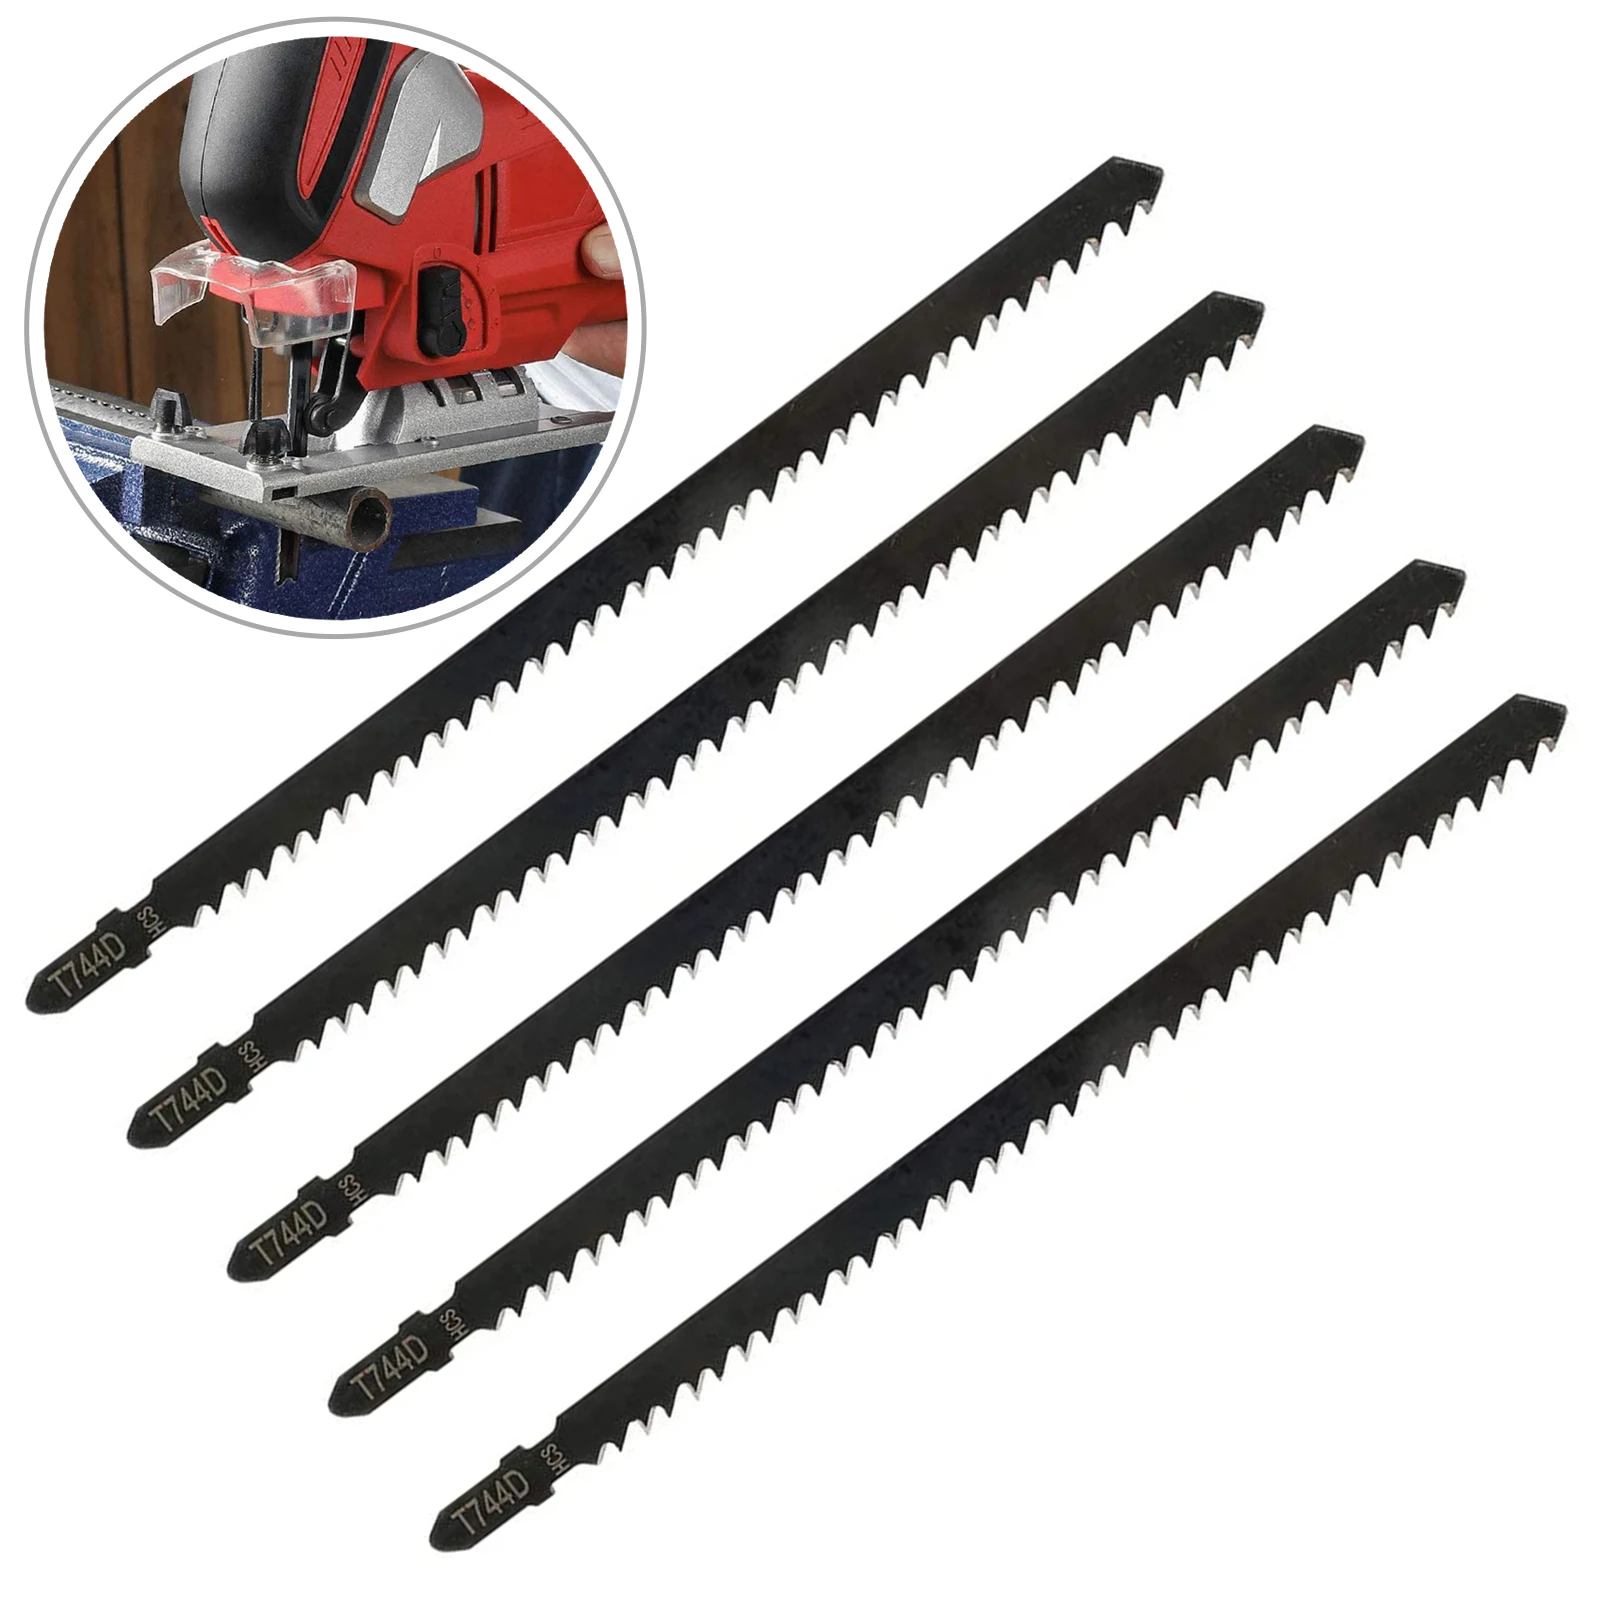 https://ae01.alicdn.com/kf/S403043f3d71940fd937f3702057ac509u/5PCS-T744D-Professional-Jigsaw-Blade-Set-180mm-Long-Jig-Saw-Blades-For-Wood-Metal-Straight-Cutting.jpeg